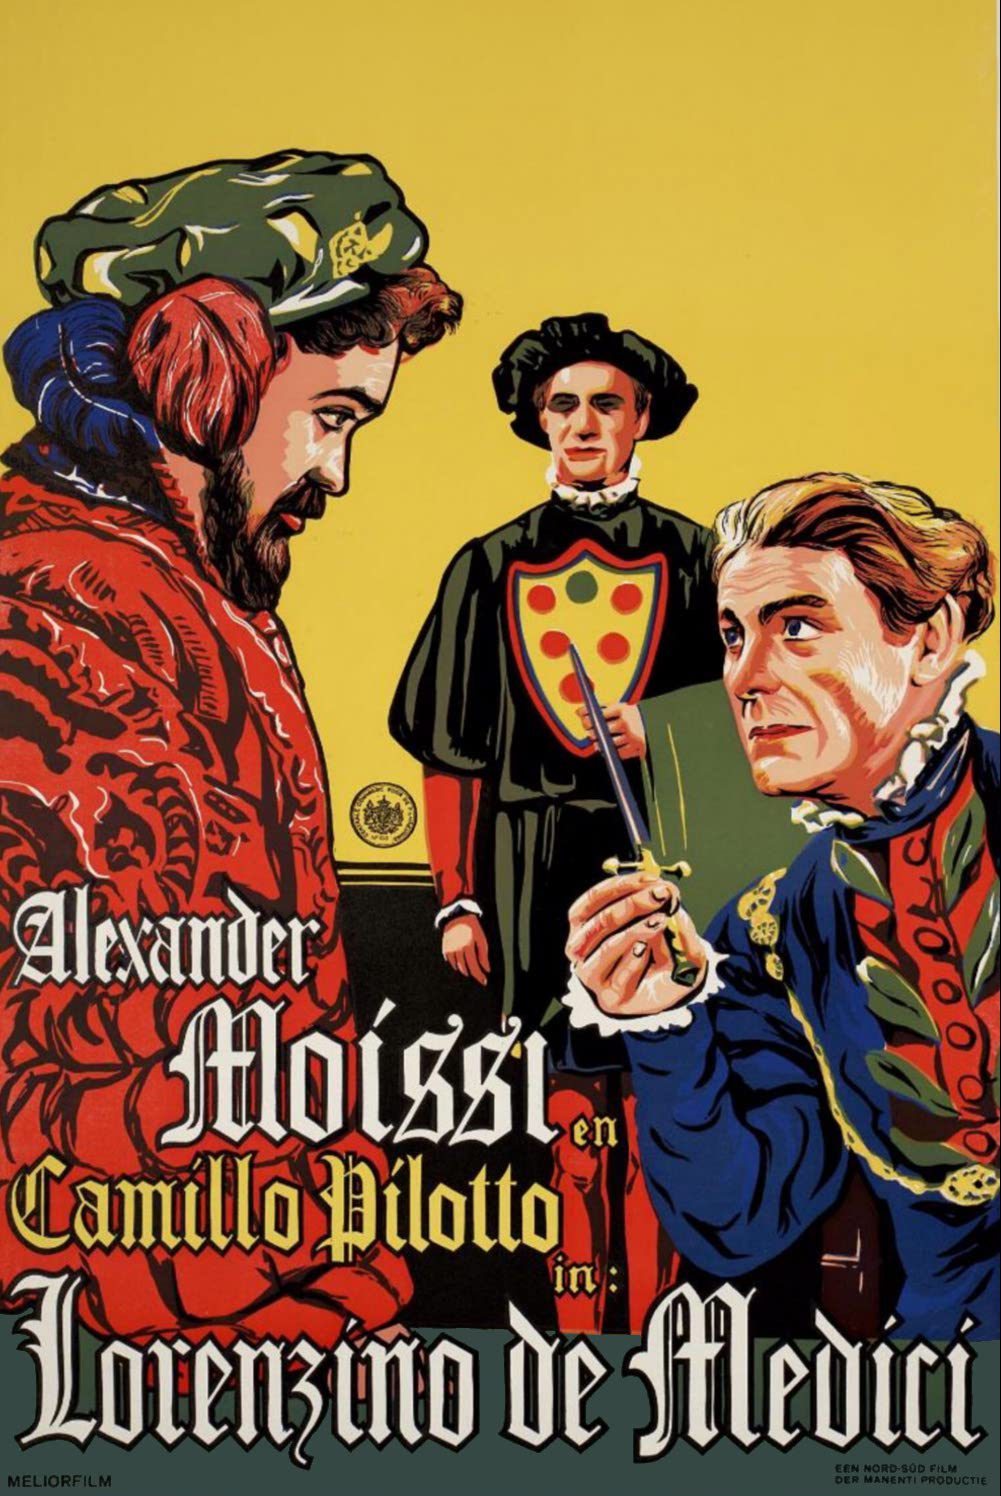 Lorenzino de’ Medici (1935)